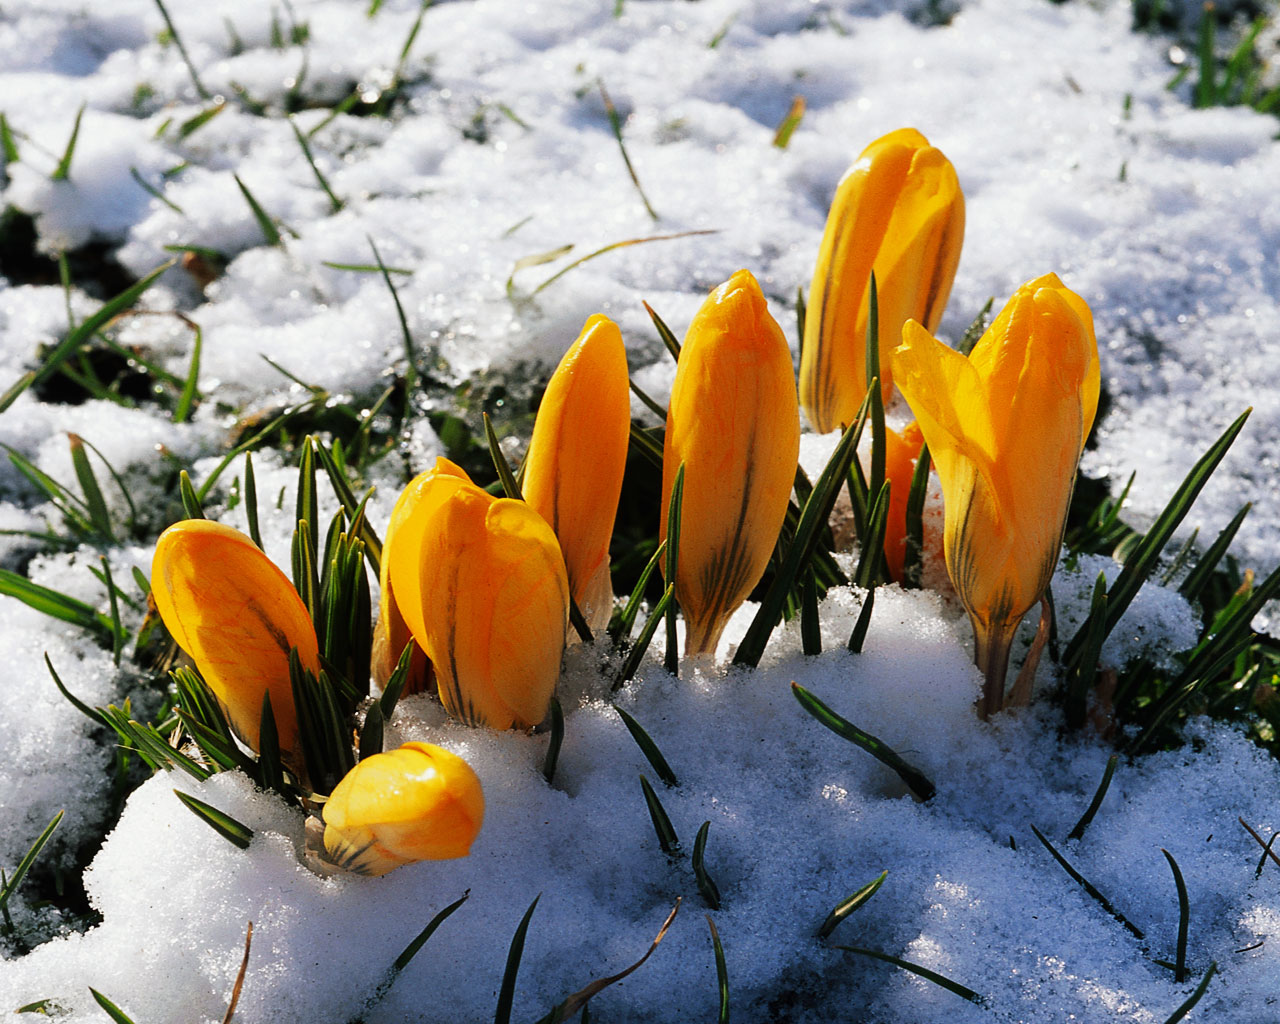 1516318 descargar imagen tierra/naturaleza, azafrán, nieve, flor amarilla: fondos de pantalla y protectores de pantalla gratis